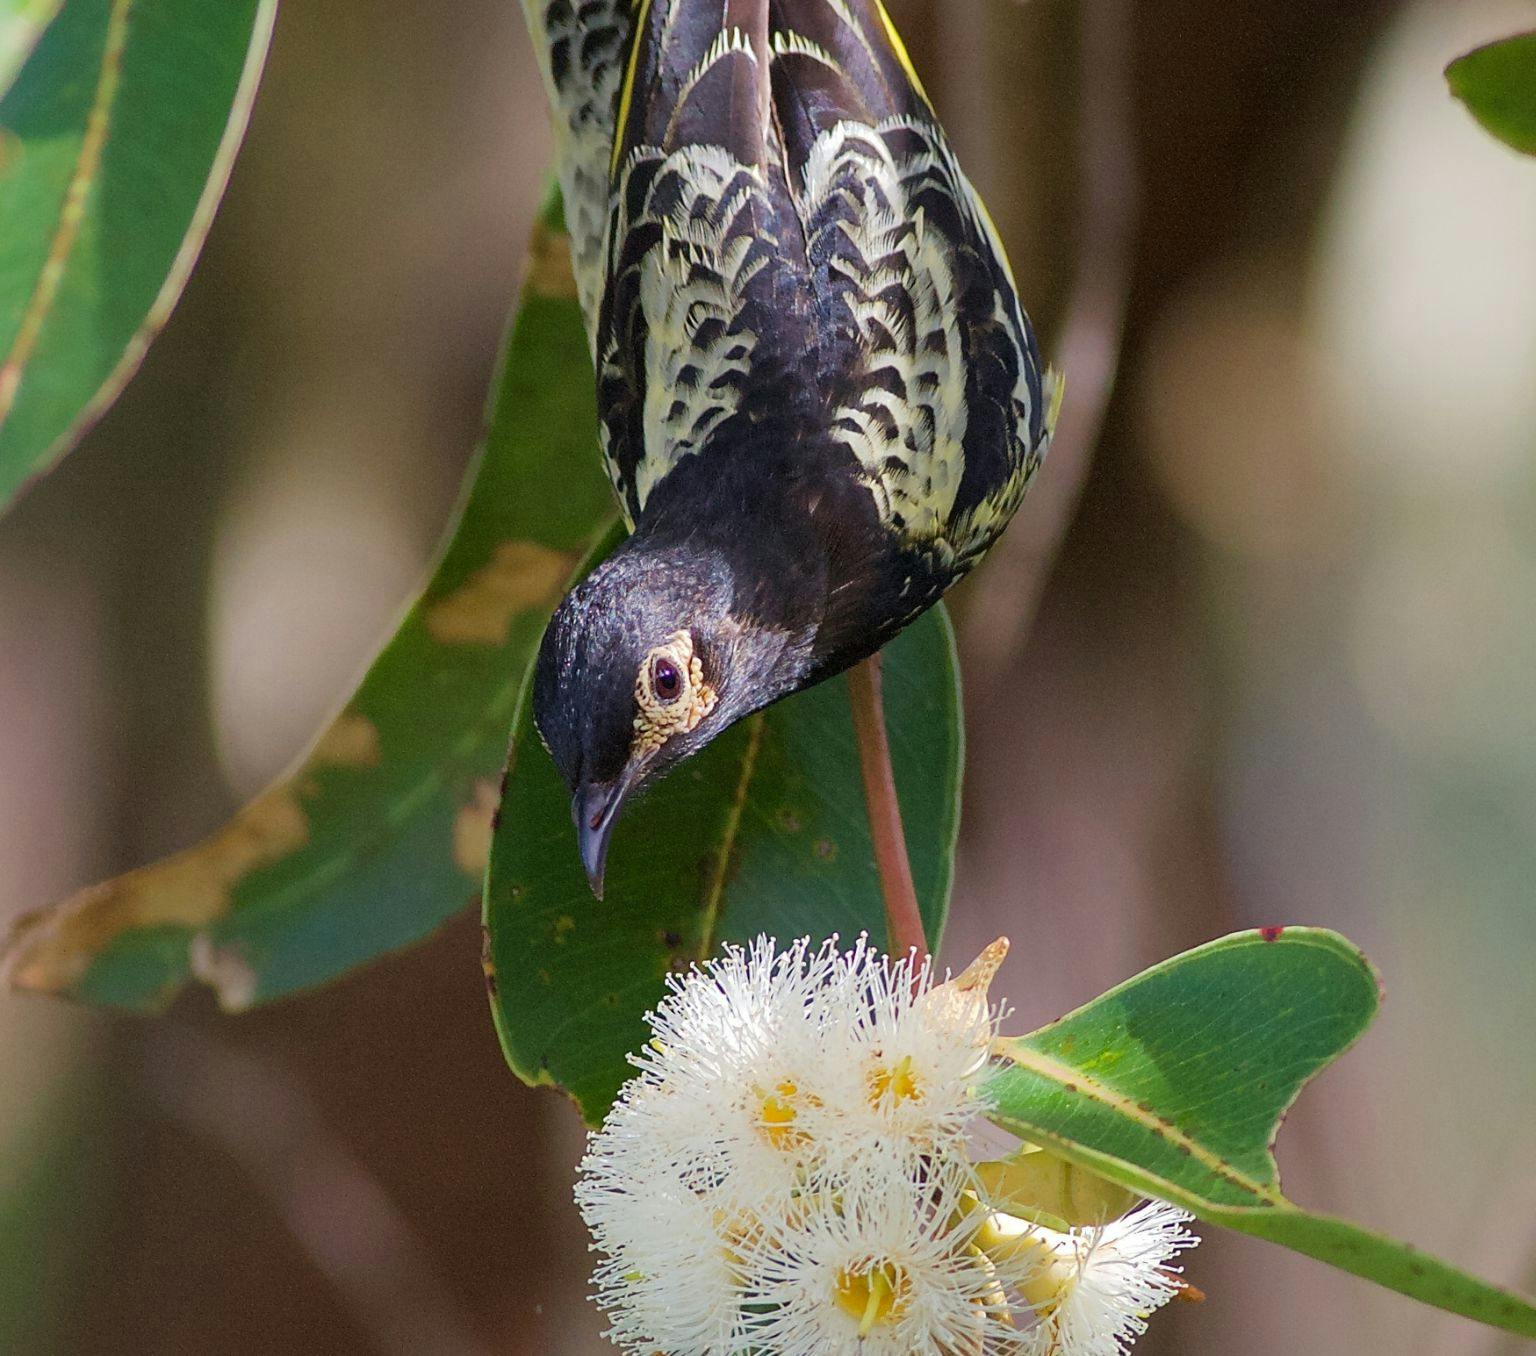 A close of a regent honeyeater bird in a tree branch..